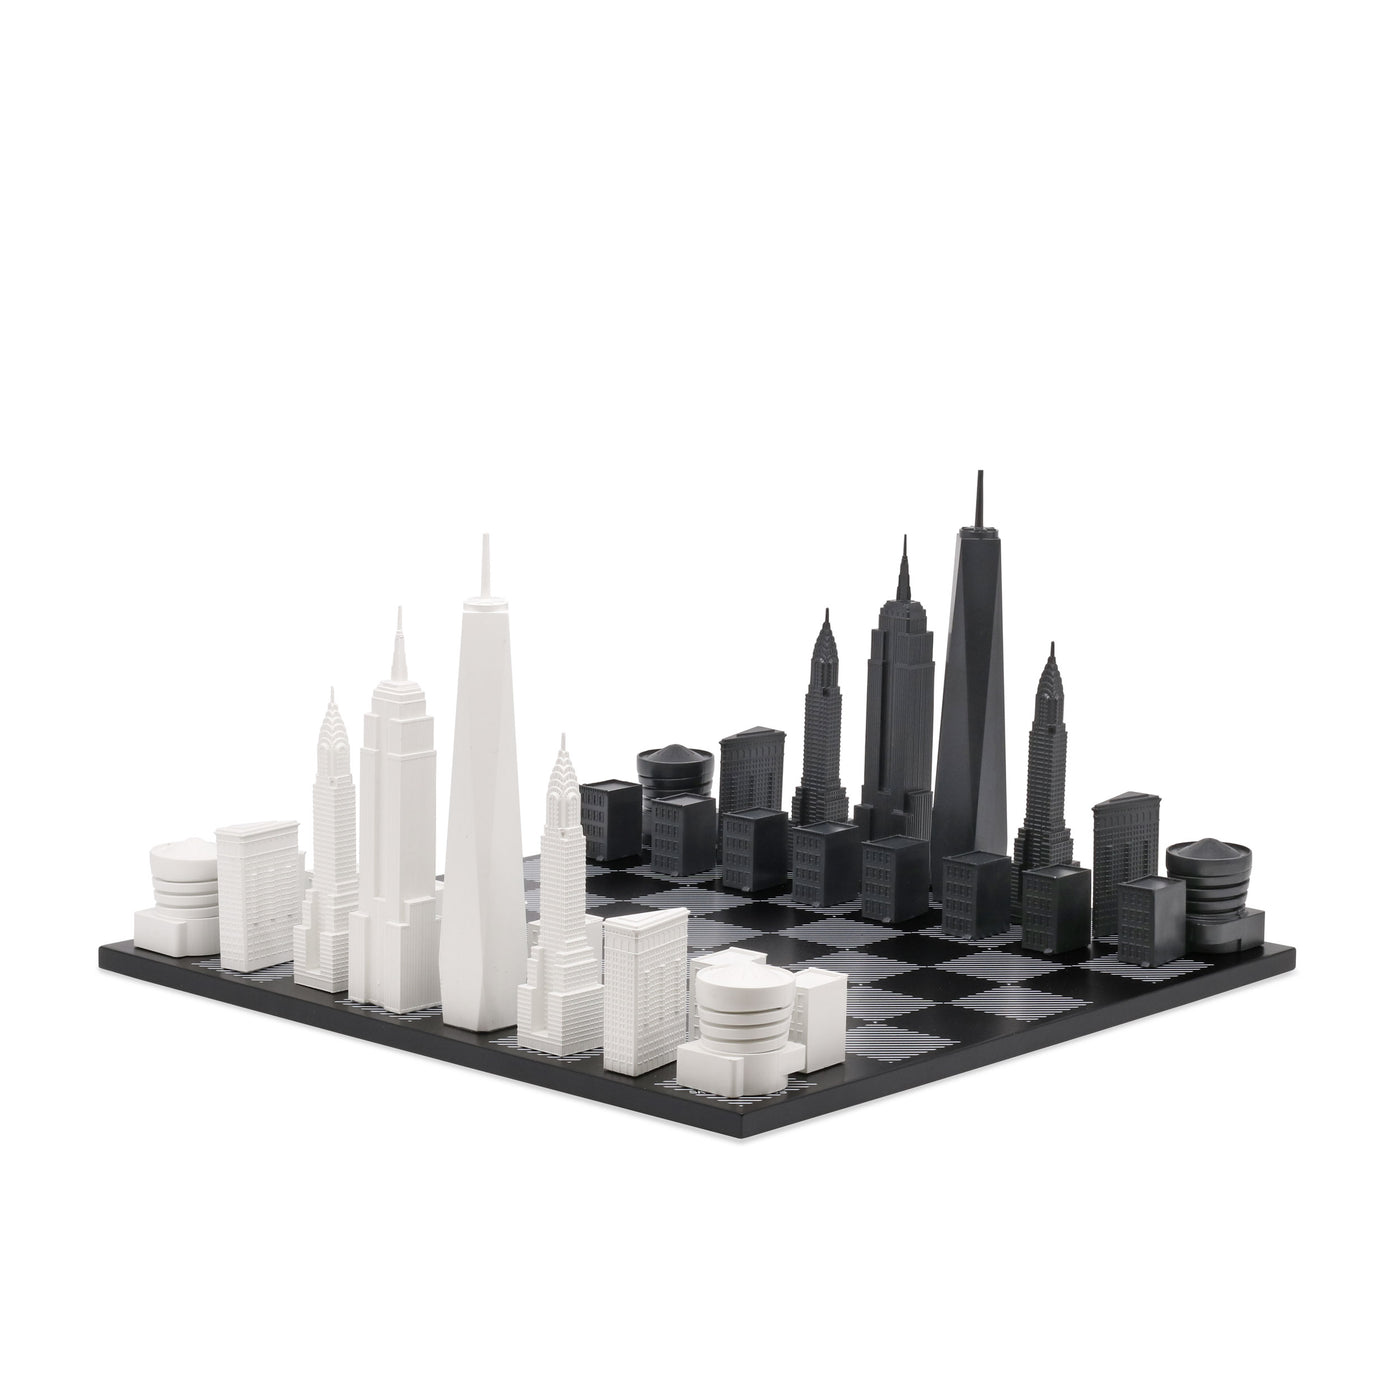 New York unique luxury chess set of famous buildings